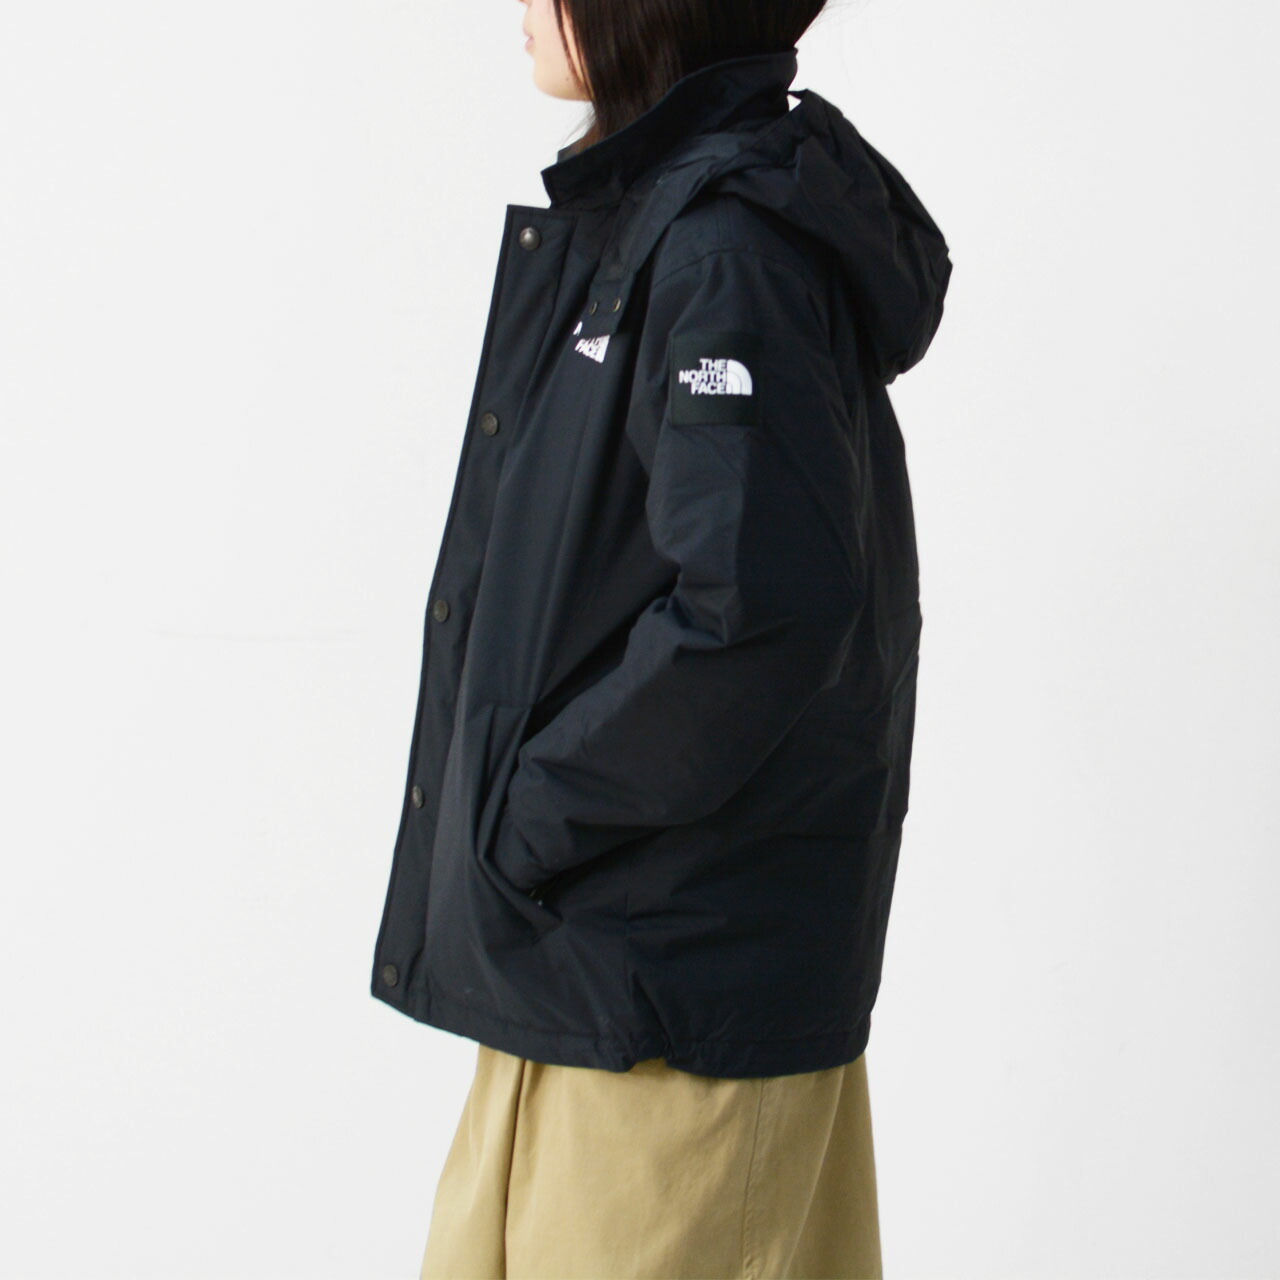 THE NORTH FACE [ザ ノースフェイス正規代理店] Ks Winter Coach Jacket [NSJ62144]_f0051306_10473619.jpg